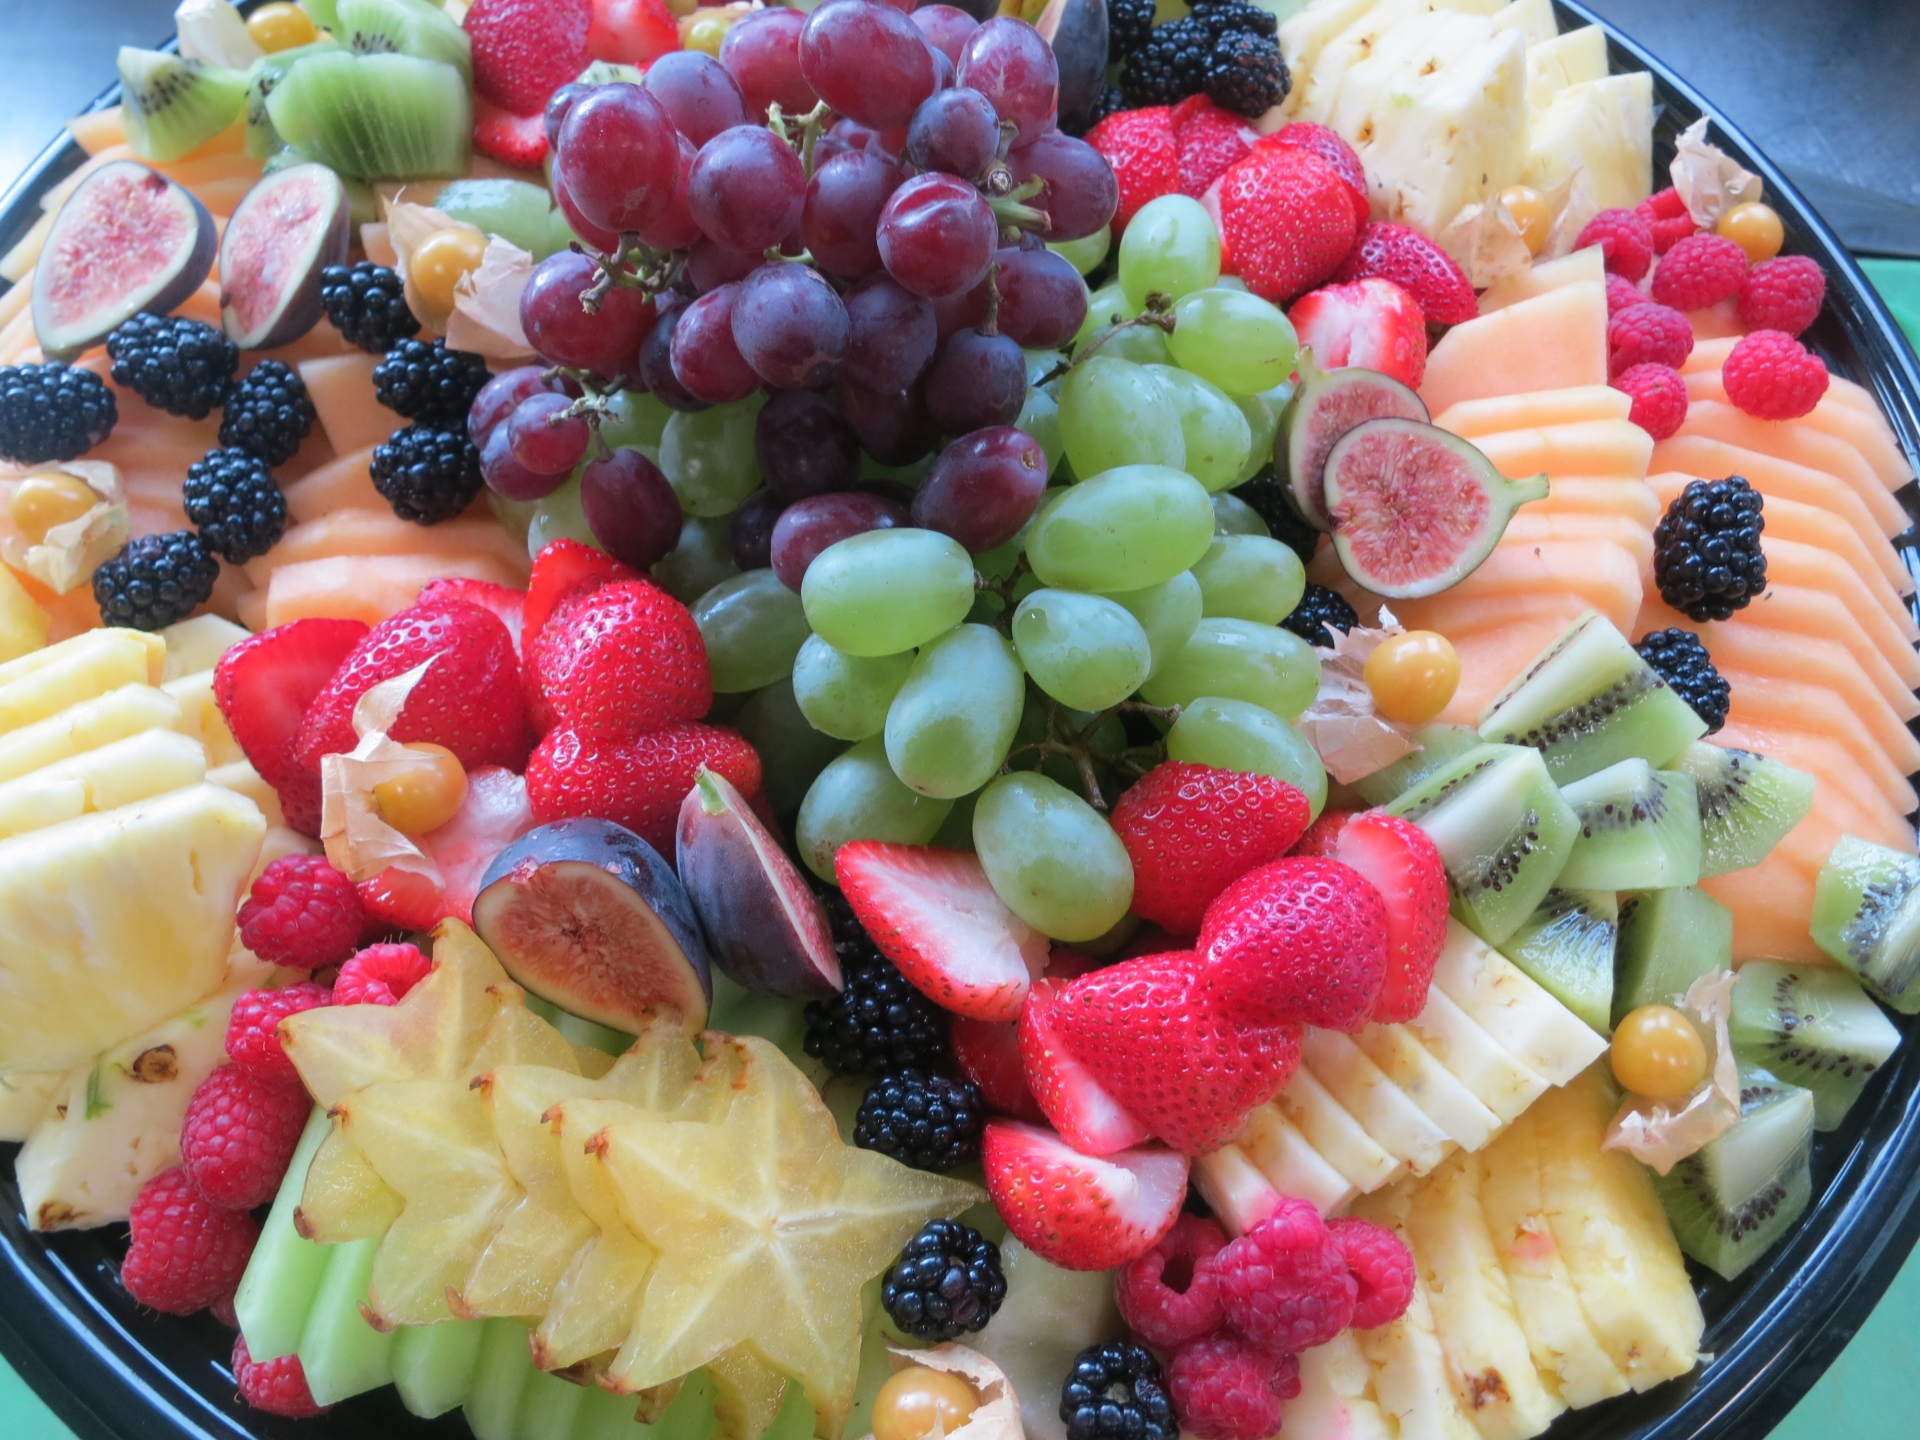 A close-up of a fruit platter